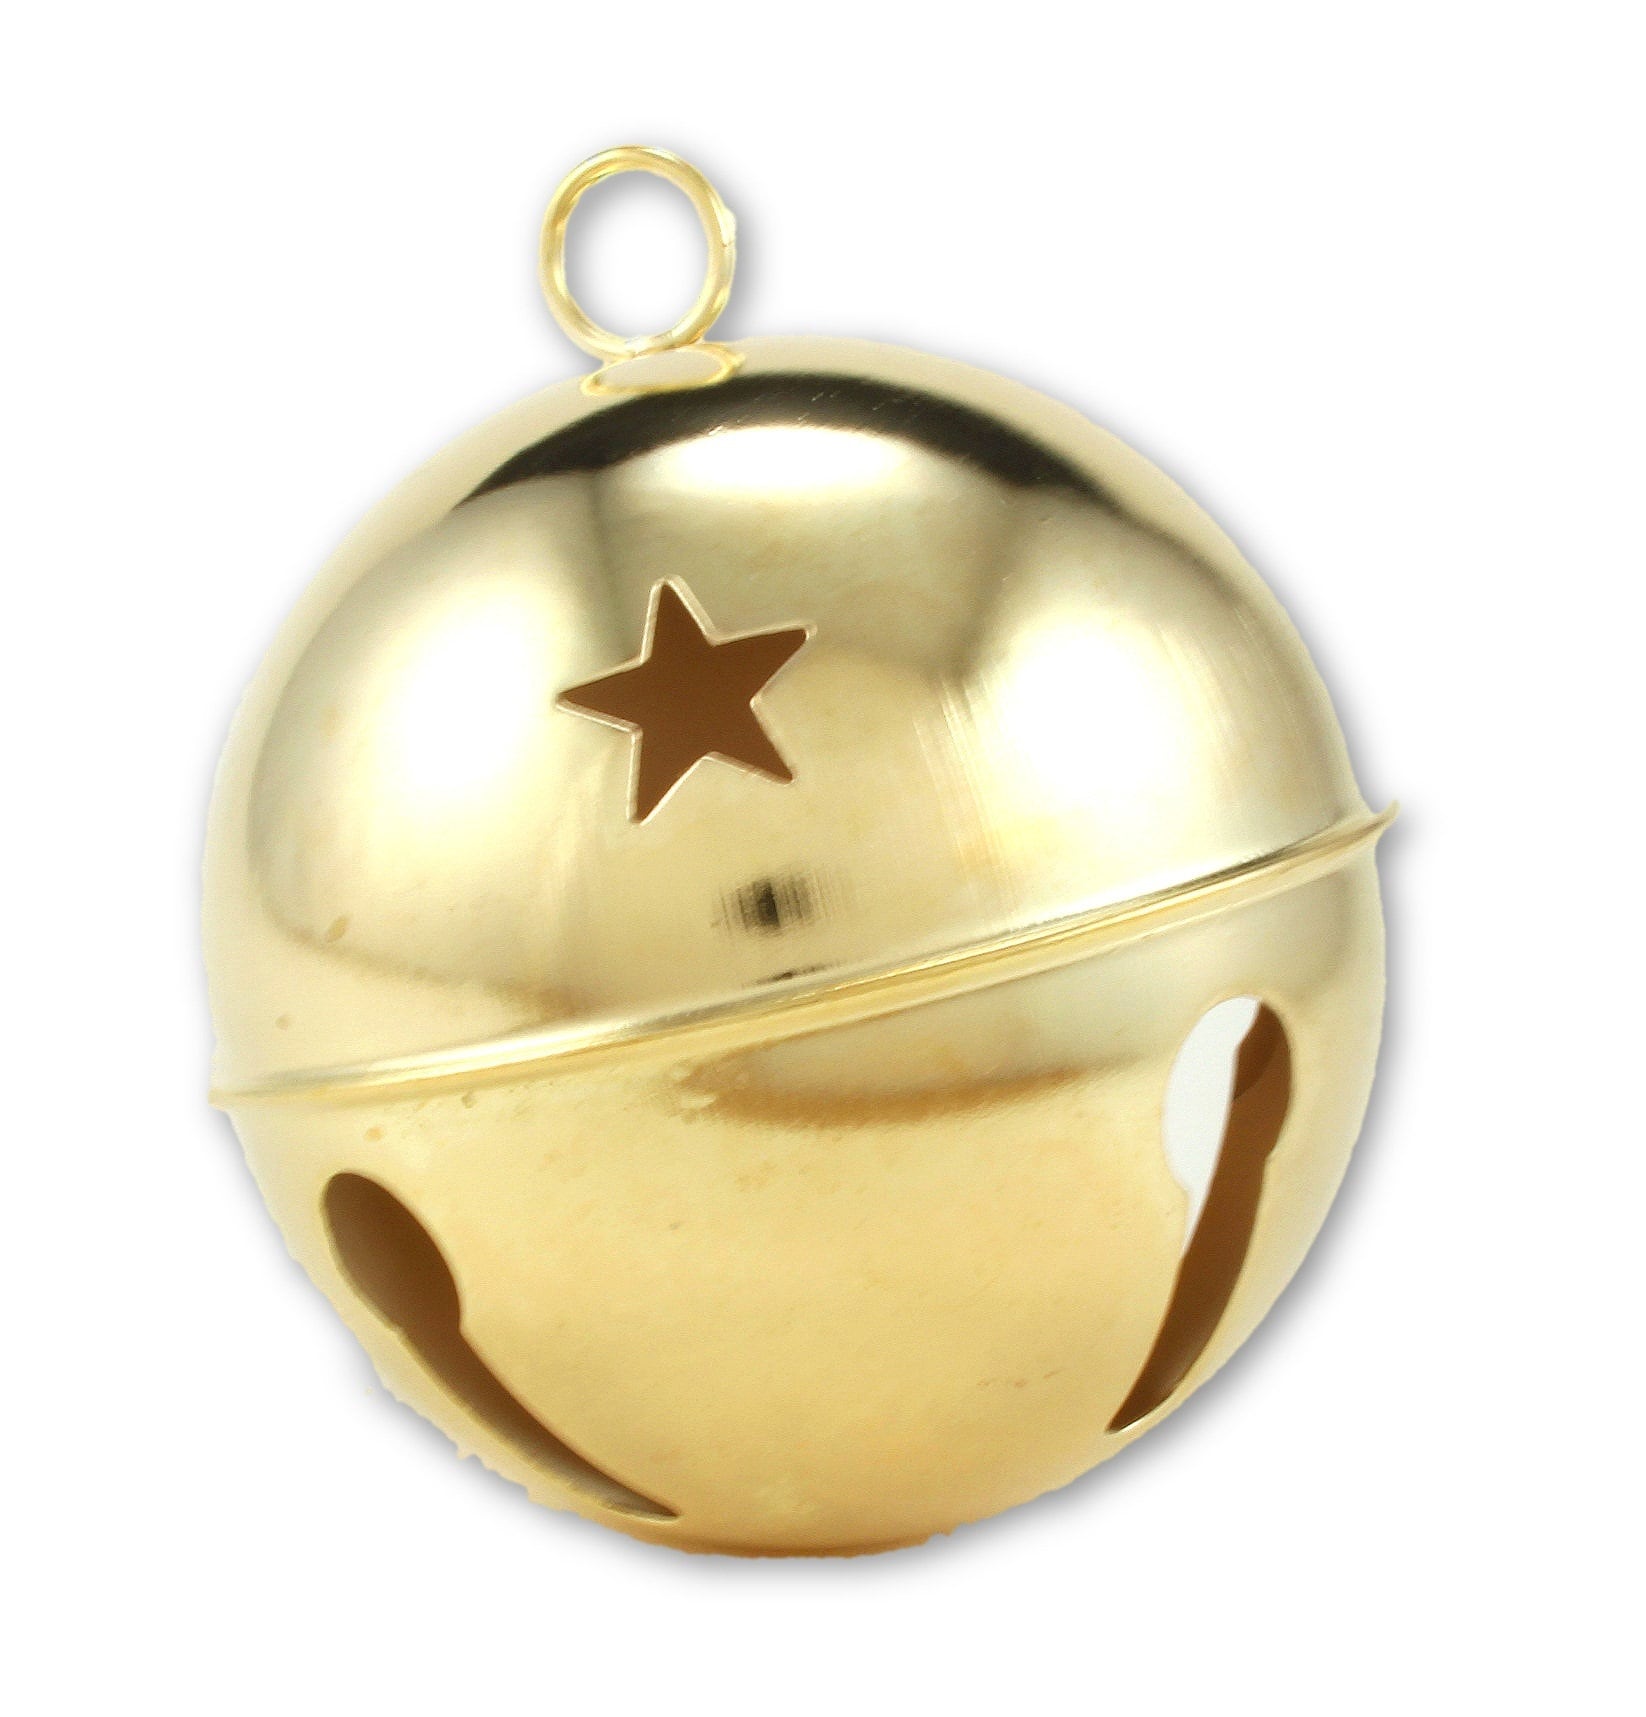 144 Bulk Count of 1 Jumbo Sized Gold Metal Jingle Bells for